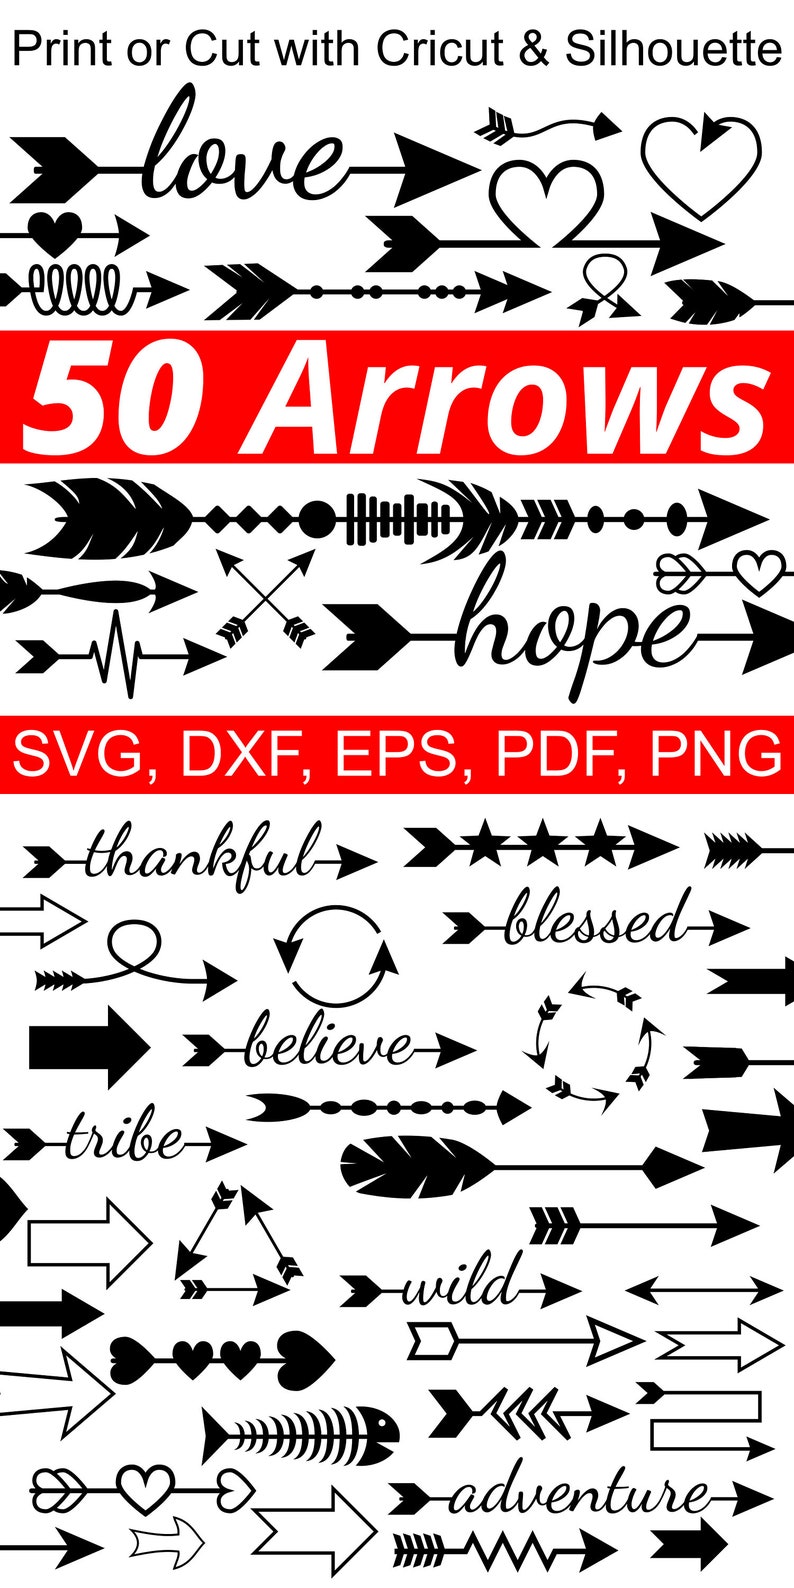 Download Clip Art Svg Arrows Clipart Svg Arrow Clip Art 50 Arrow Svg File Arrows Svg Files Arrow Png Arrow Clipart Arrow Pdf Arrow Dxf Art Collectibles